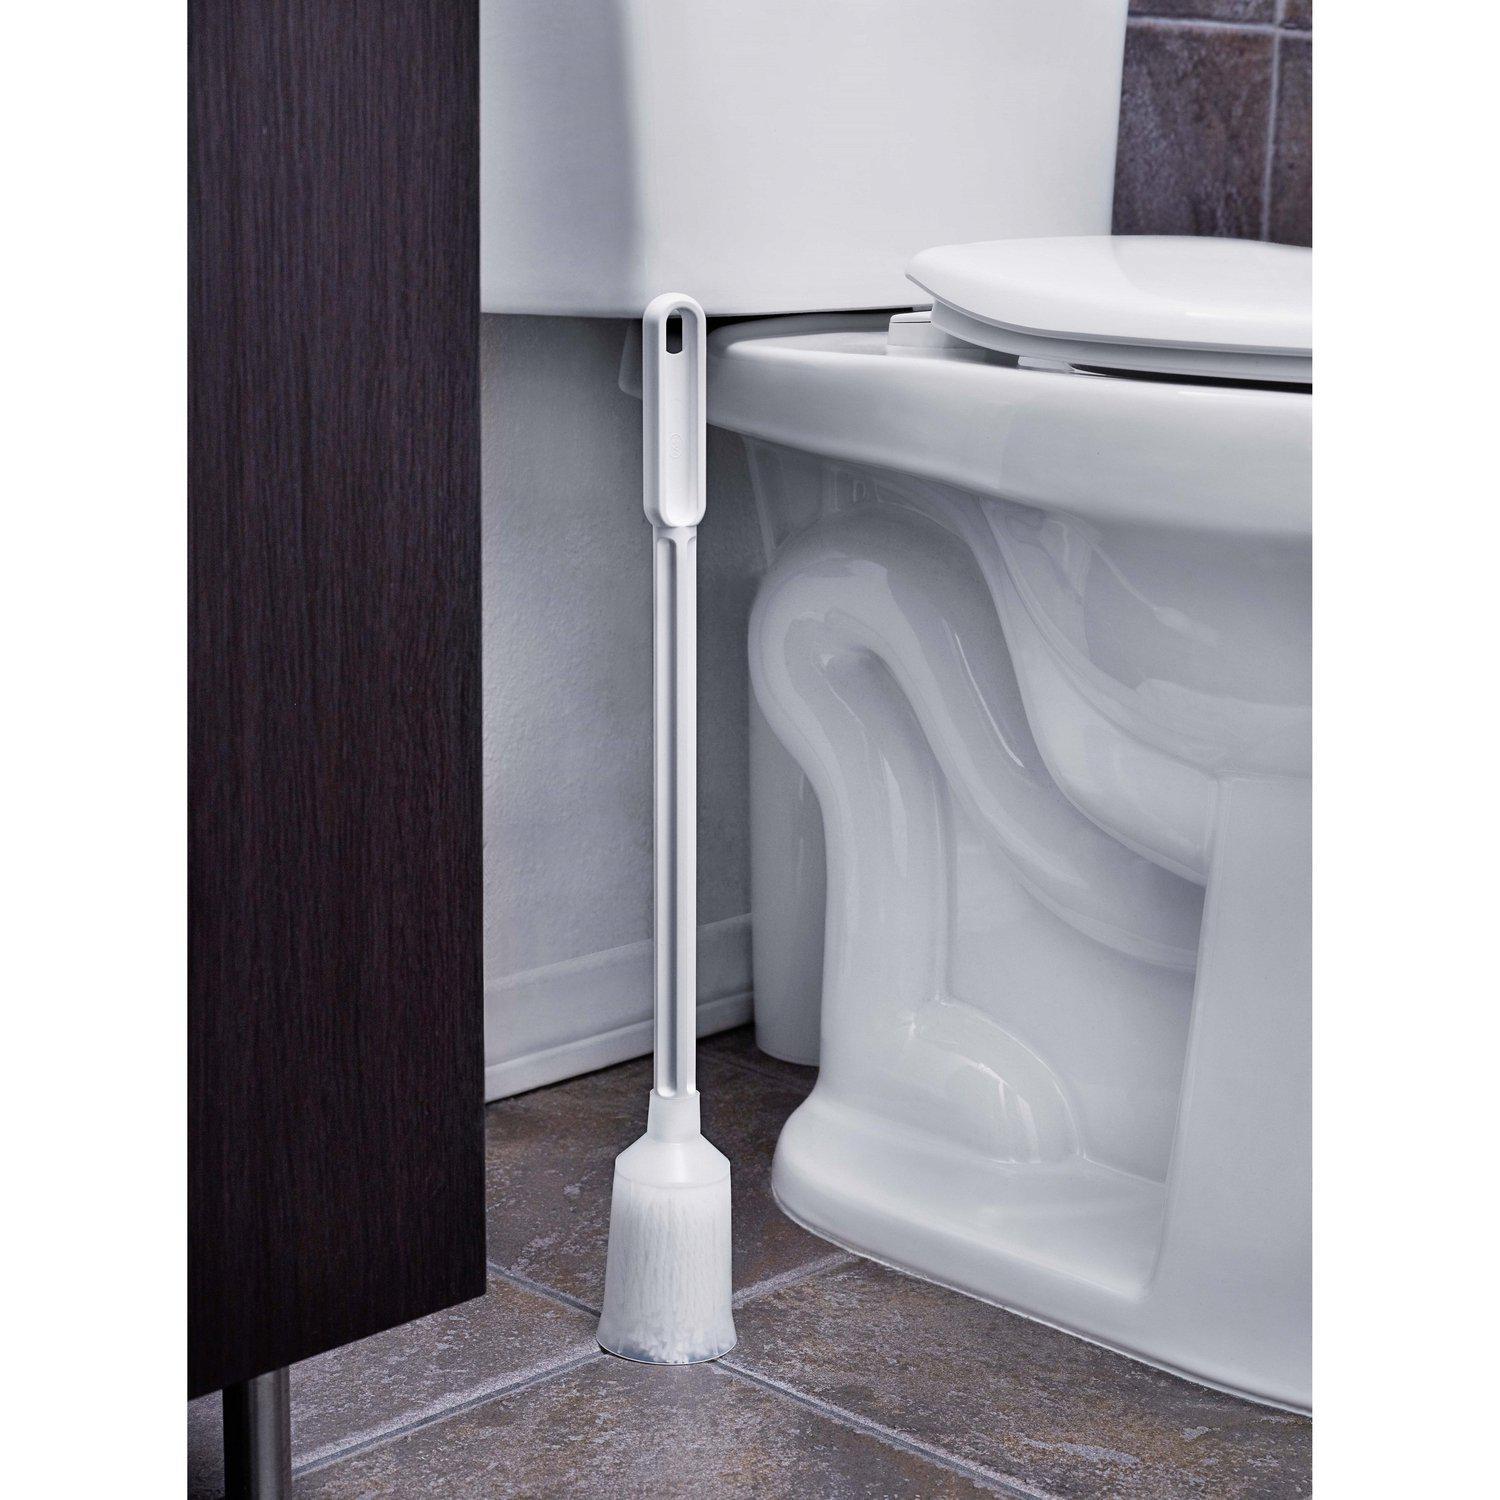 Adjustable Bathroom Long-handled Brush To Scrub Toilet Bath Brush